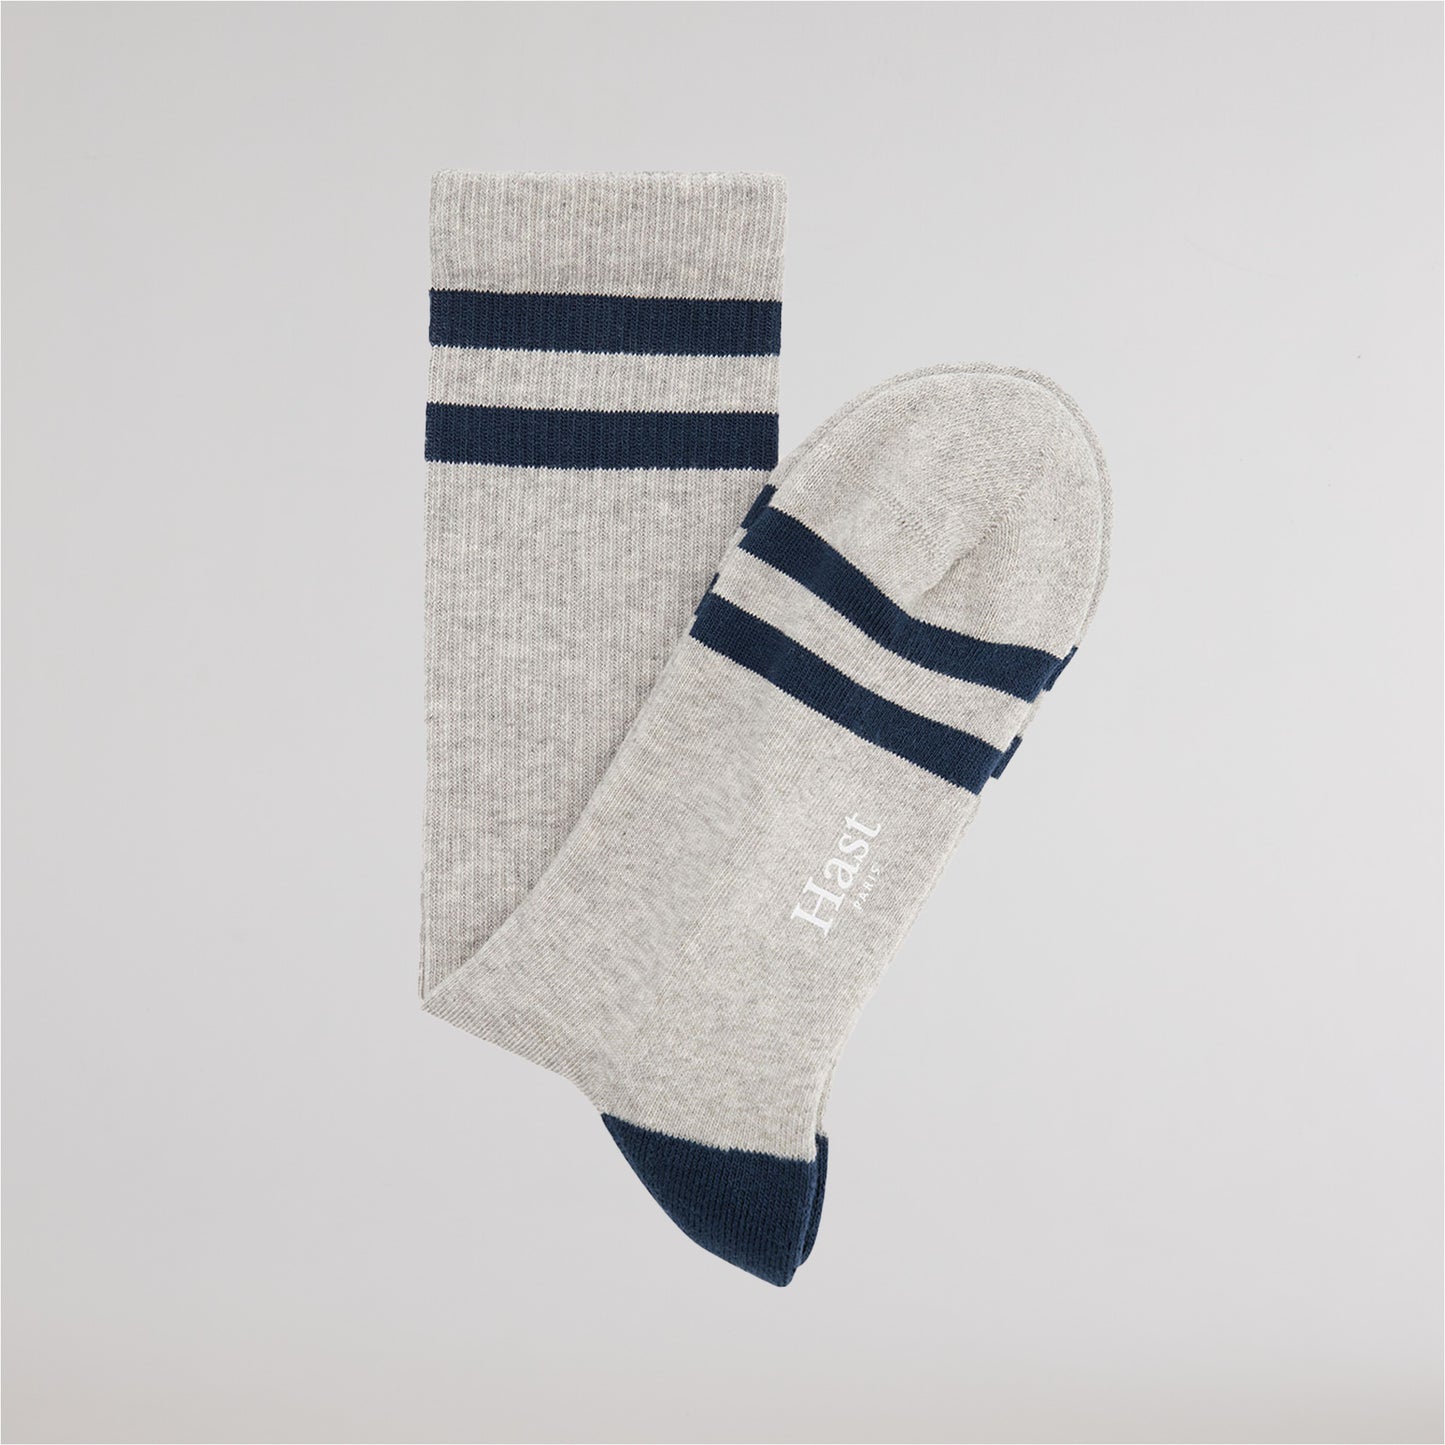 Gray and navy striped socks